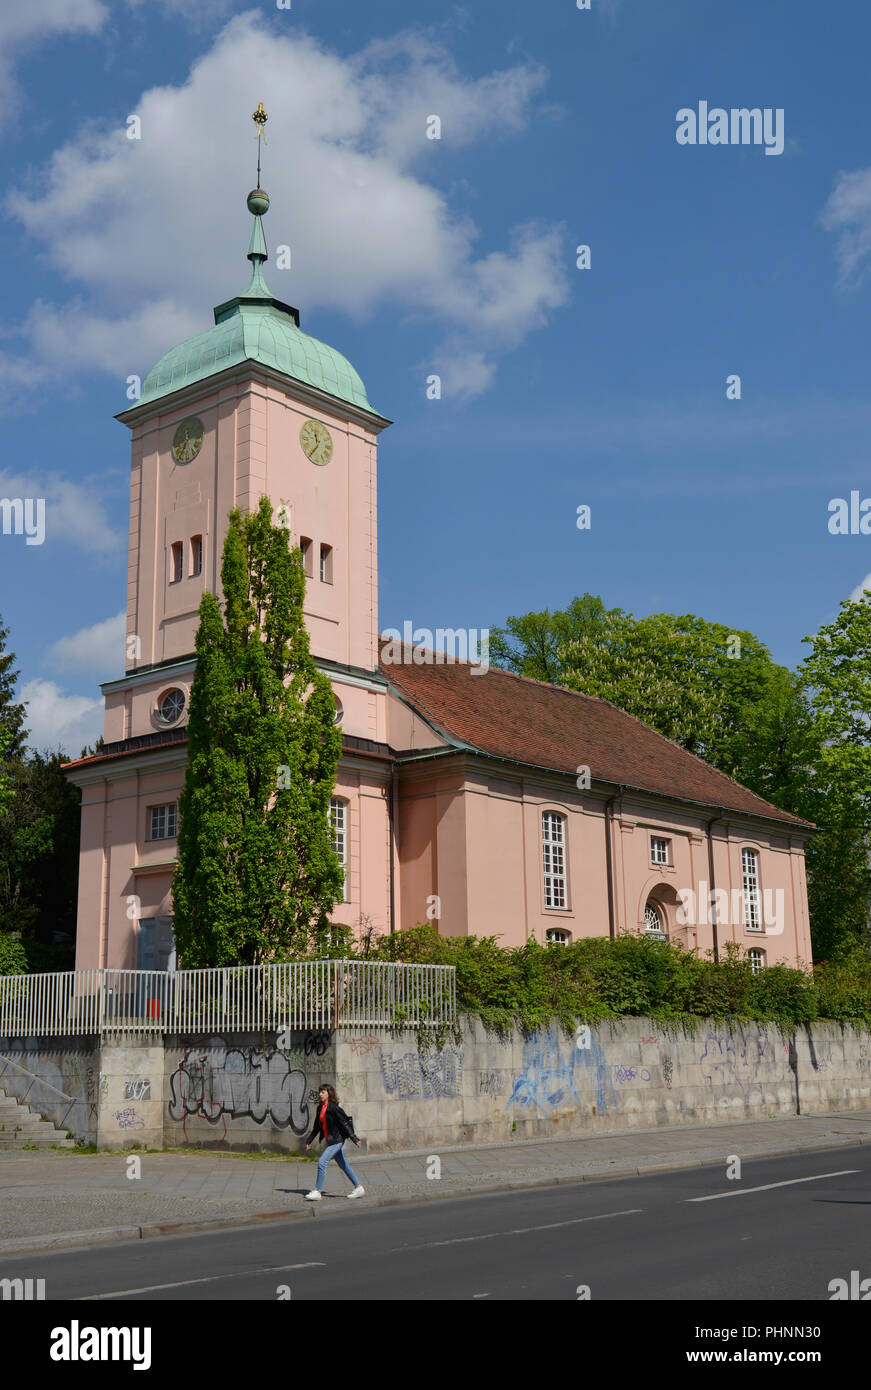 Dorfkirche, Alt-Schoeneberg, Hauptstrasse, Schoeneberg, Berlin, Deutschland Stock Photo